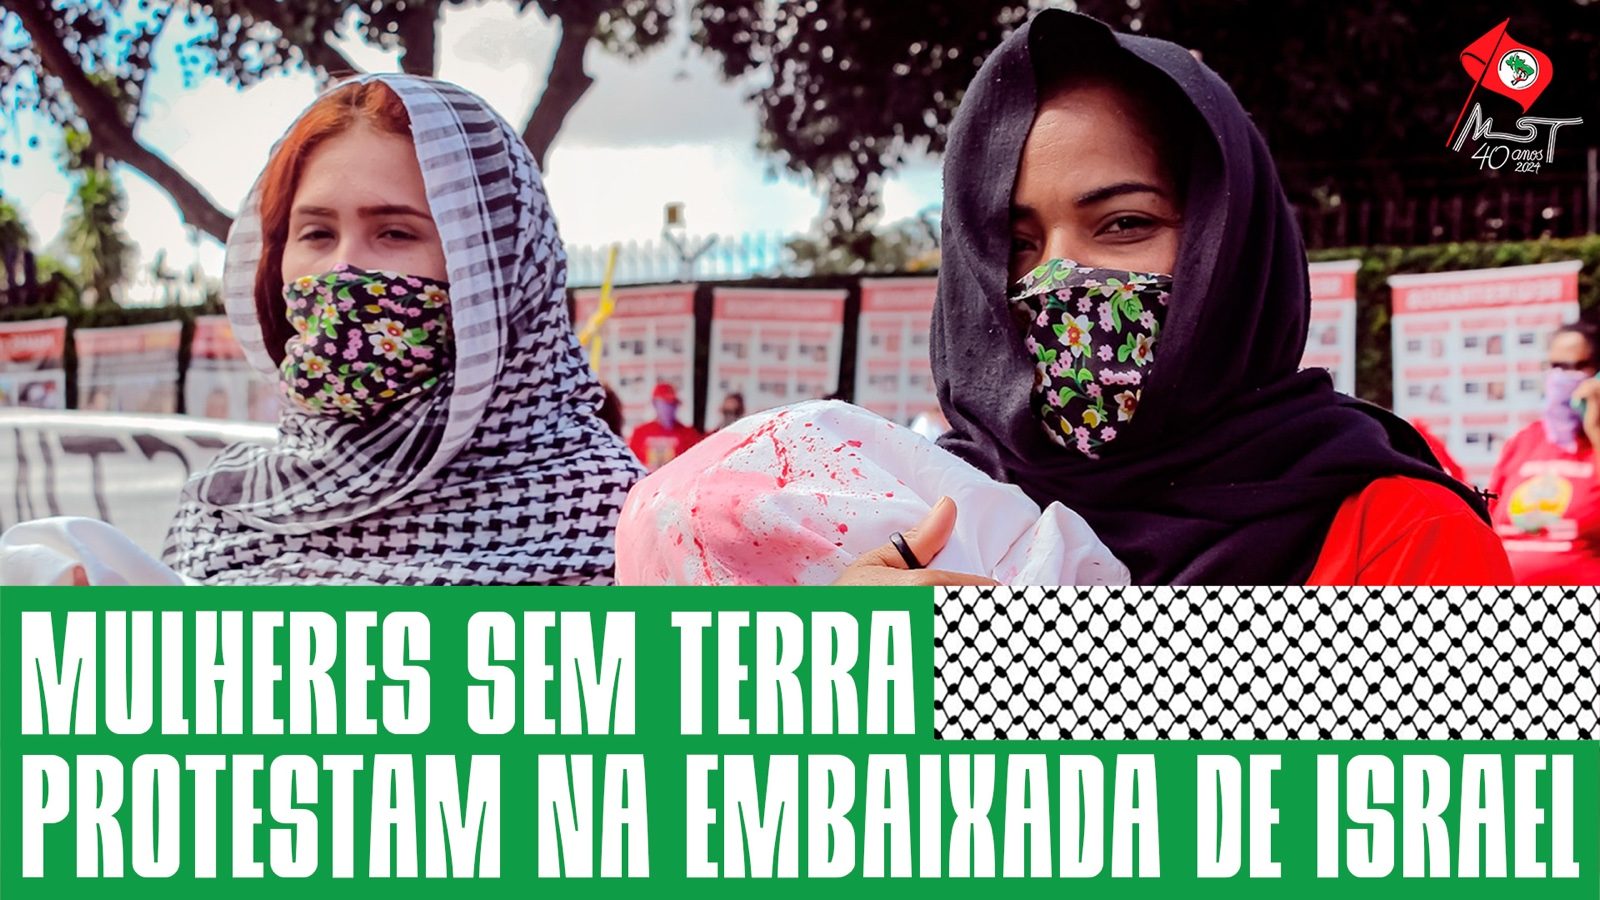 Camponesas protestam contra genocídio palestino em Brasília